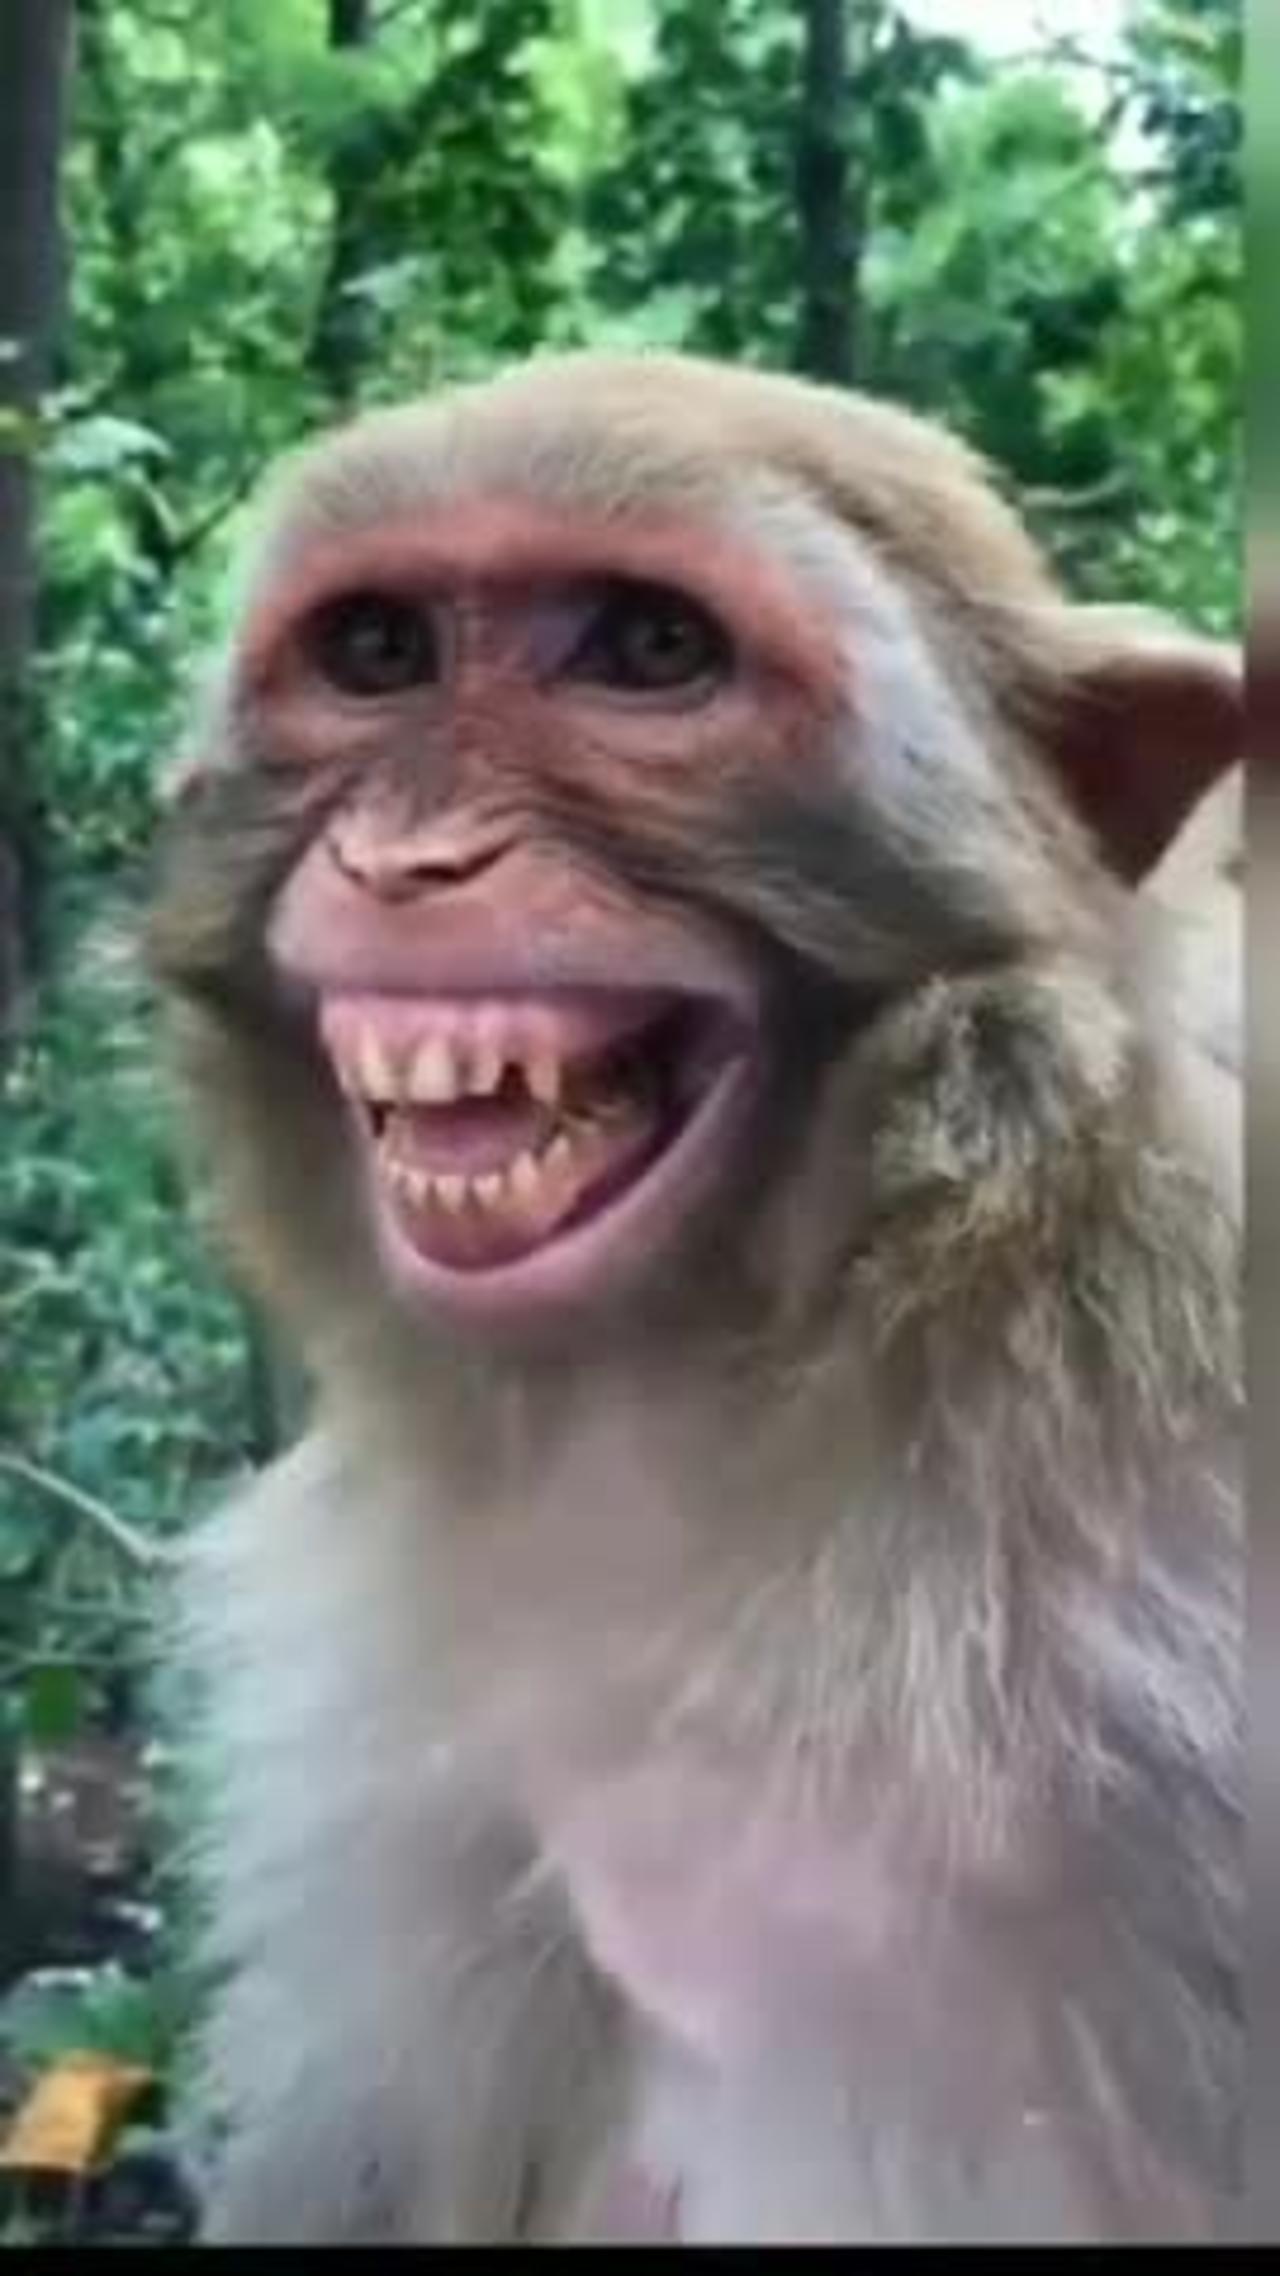 Monkey funny video 🐵